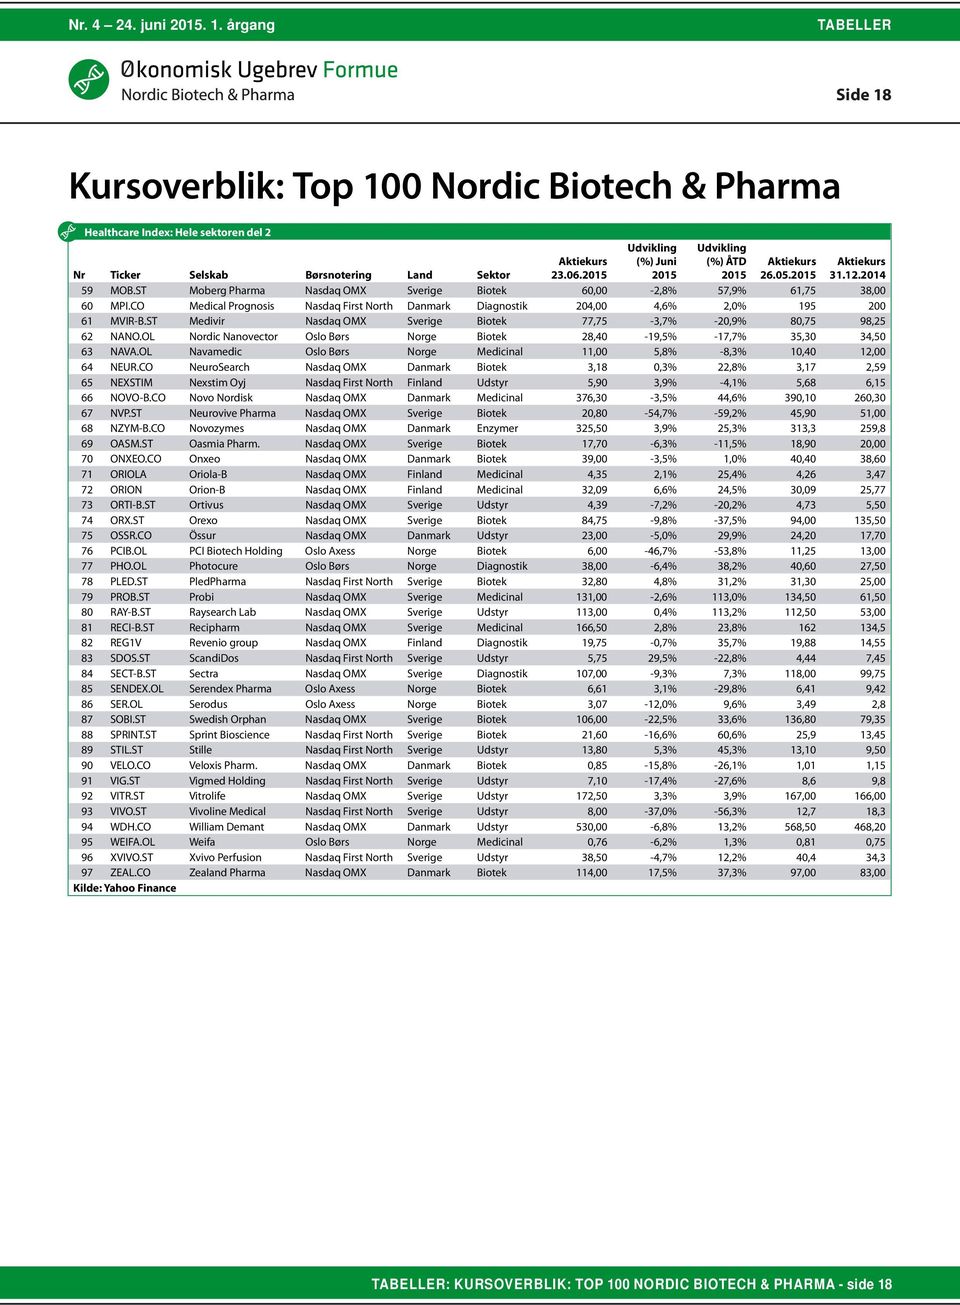 CO Medical Prognosis Nasdaq First North Danmark Diagnostik 204,00 4,6% 2,0% 195 200 61 MVIR-B.ST Medivir Nasdaq OMX Sverige Biotek 77,75-3,7% -20,9% 80,75 98,25 62 NANO.